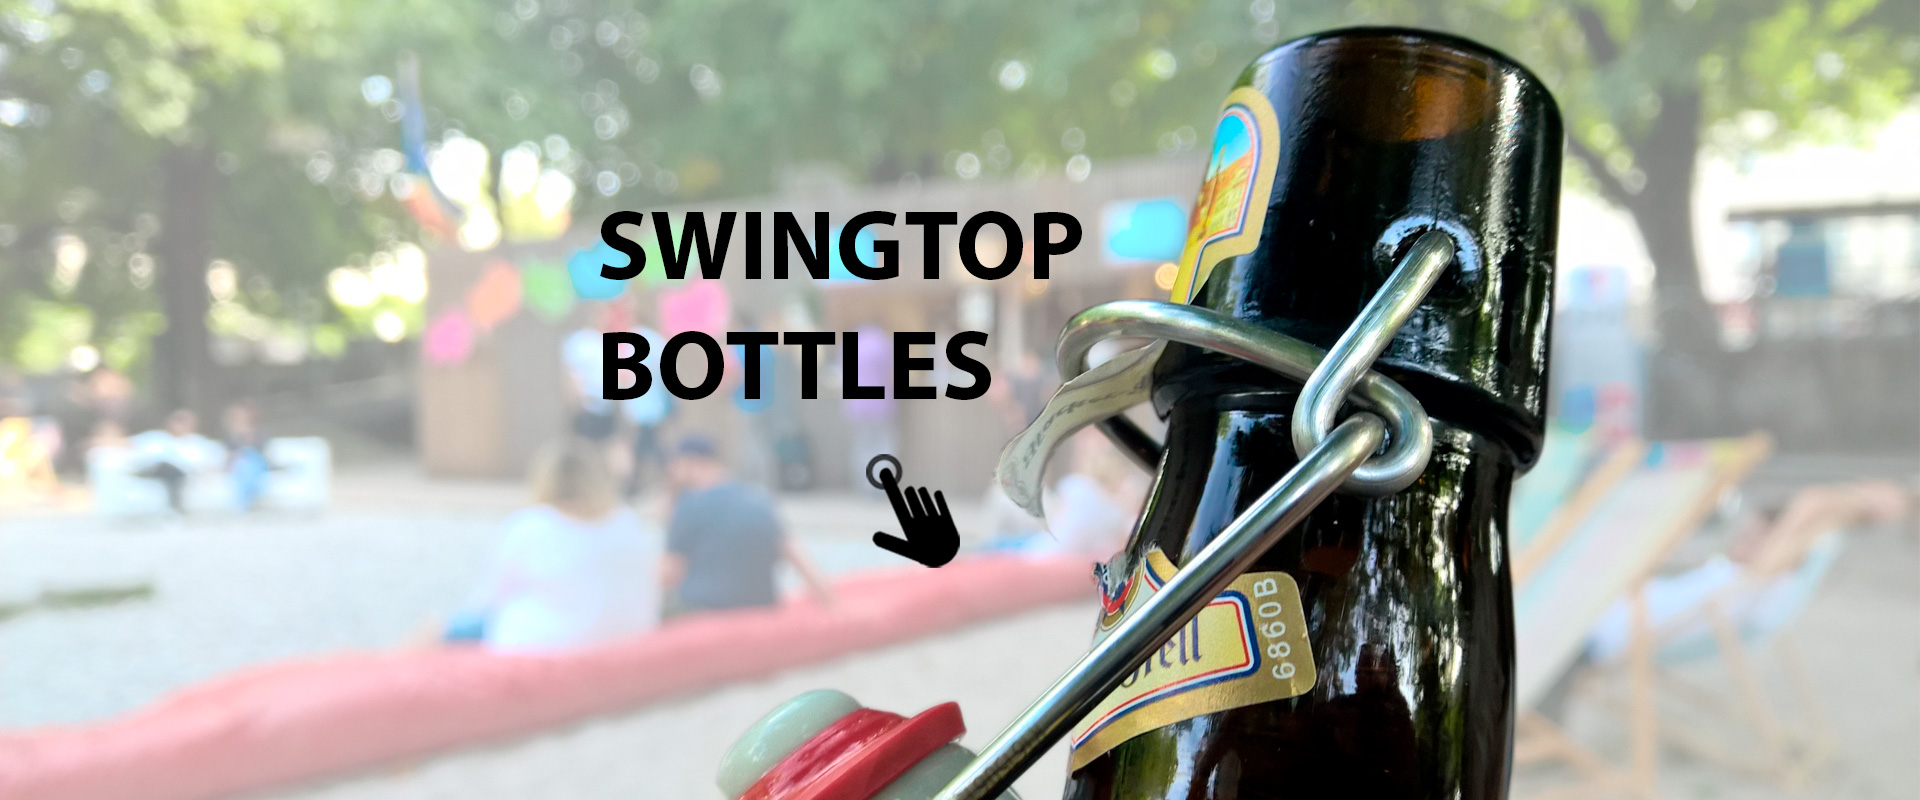 Swingtop bottles